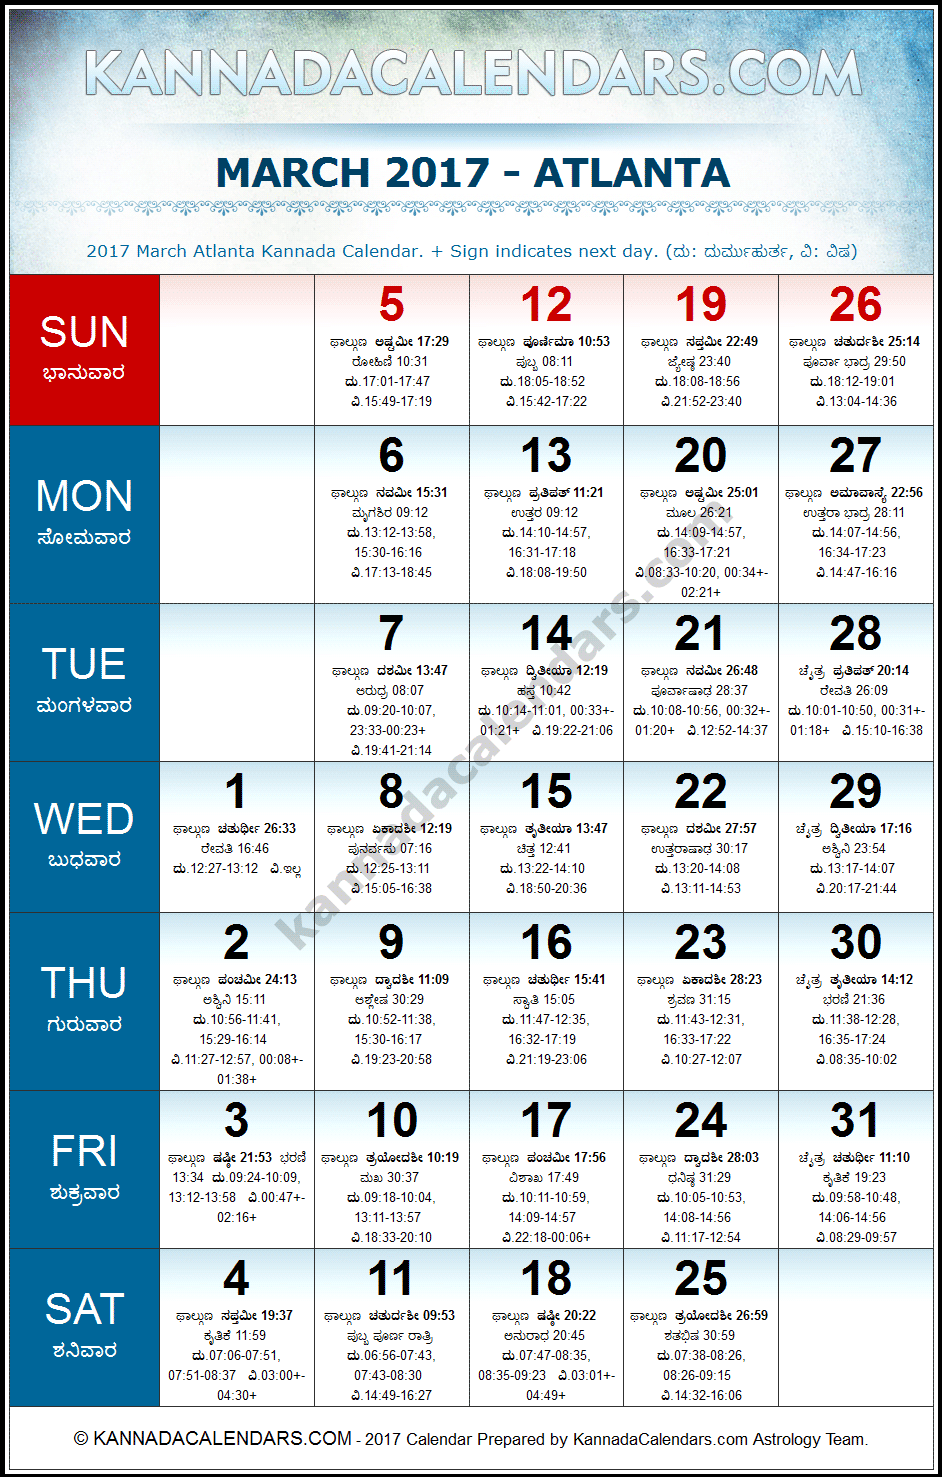 March 2017 Kannada Calendar for Atlanta, USA